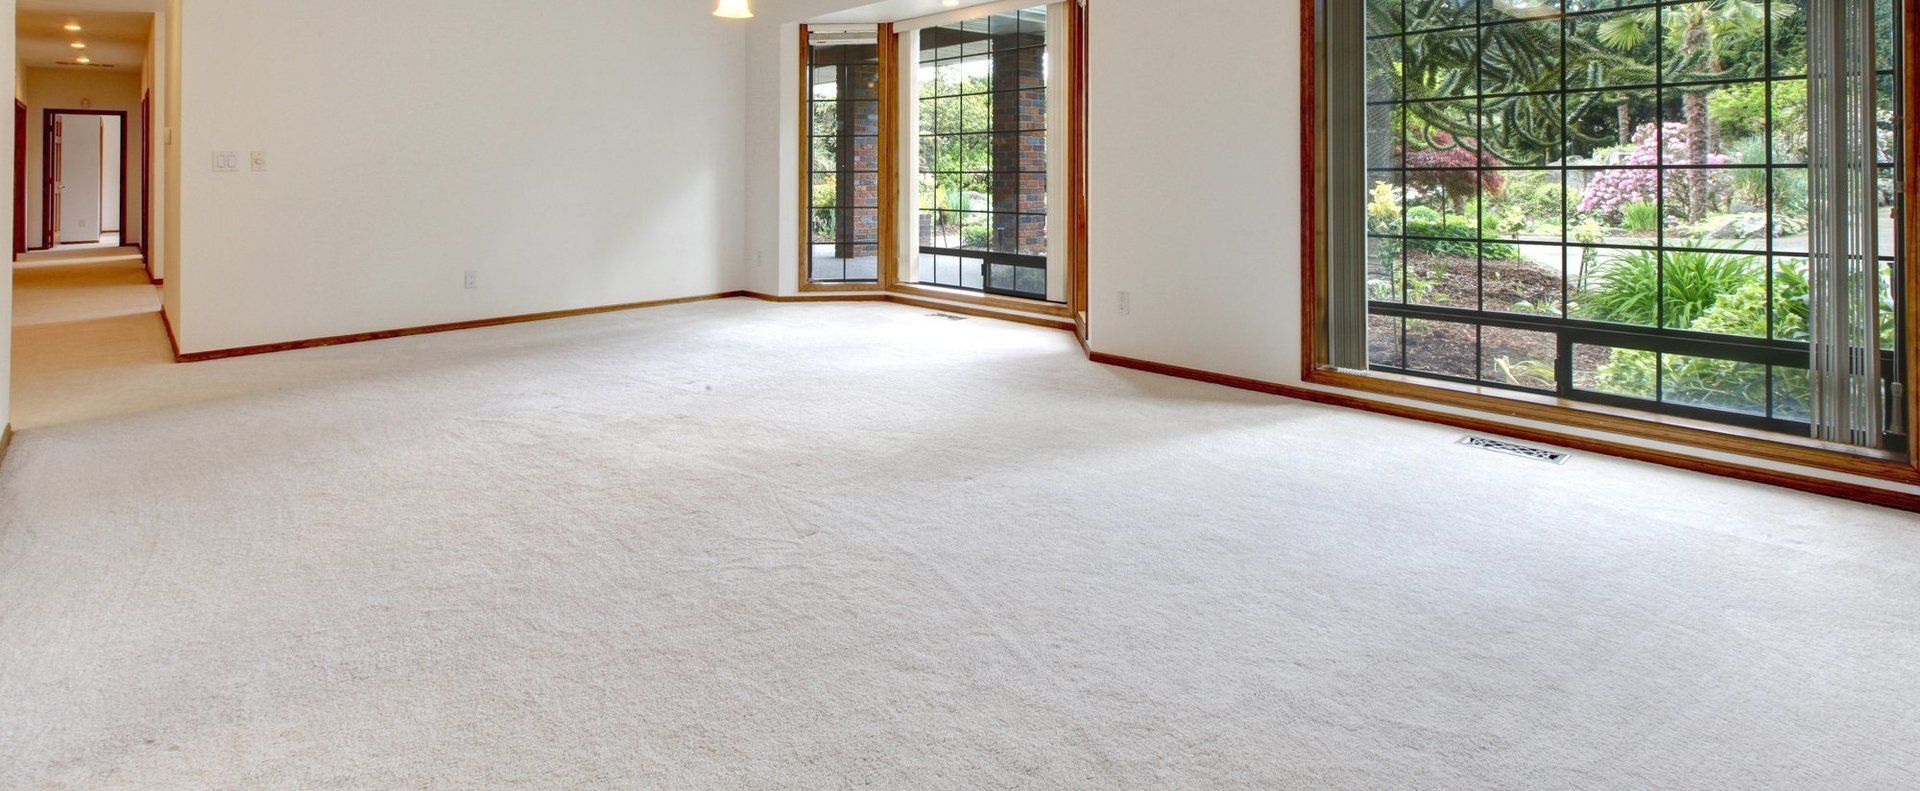 room carpeting